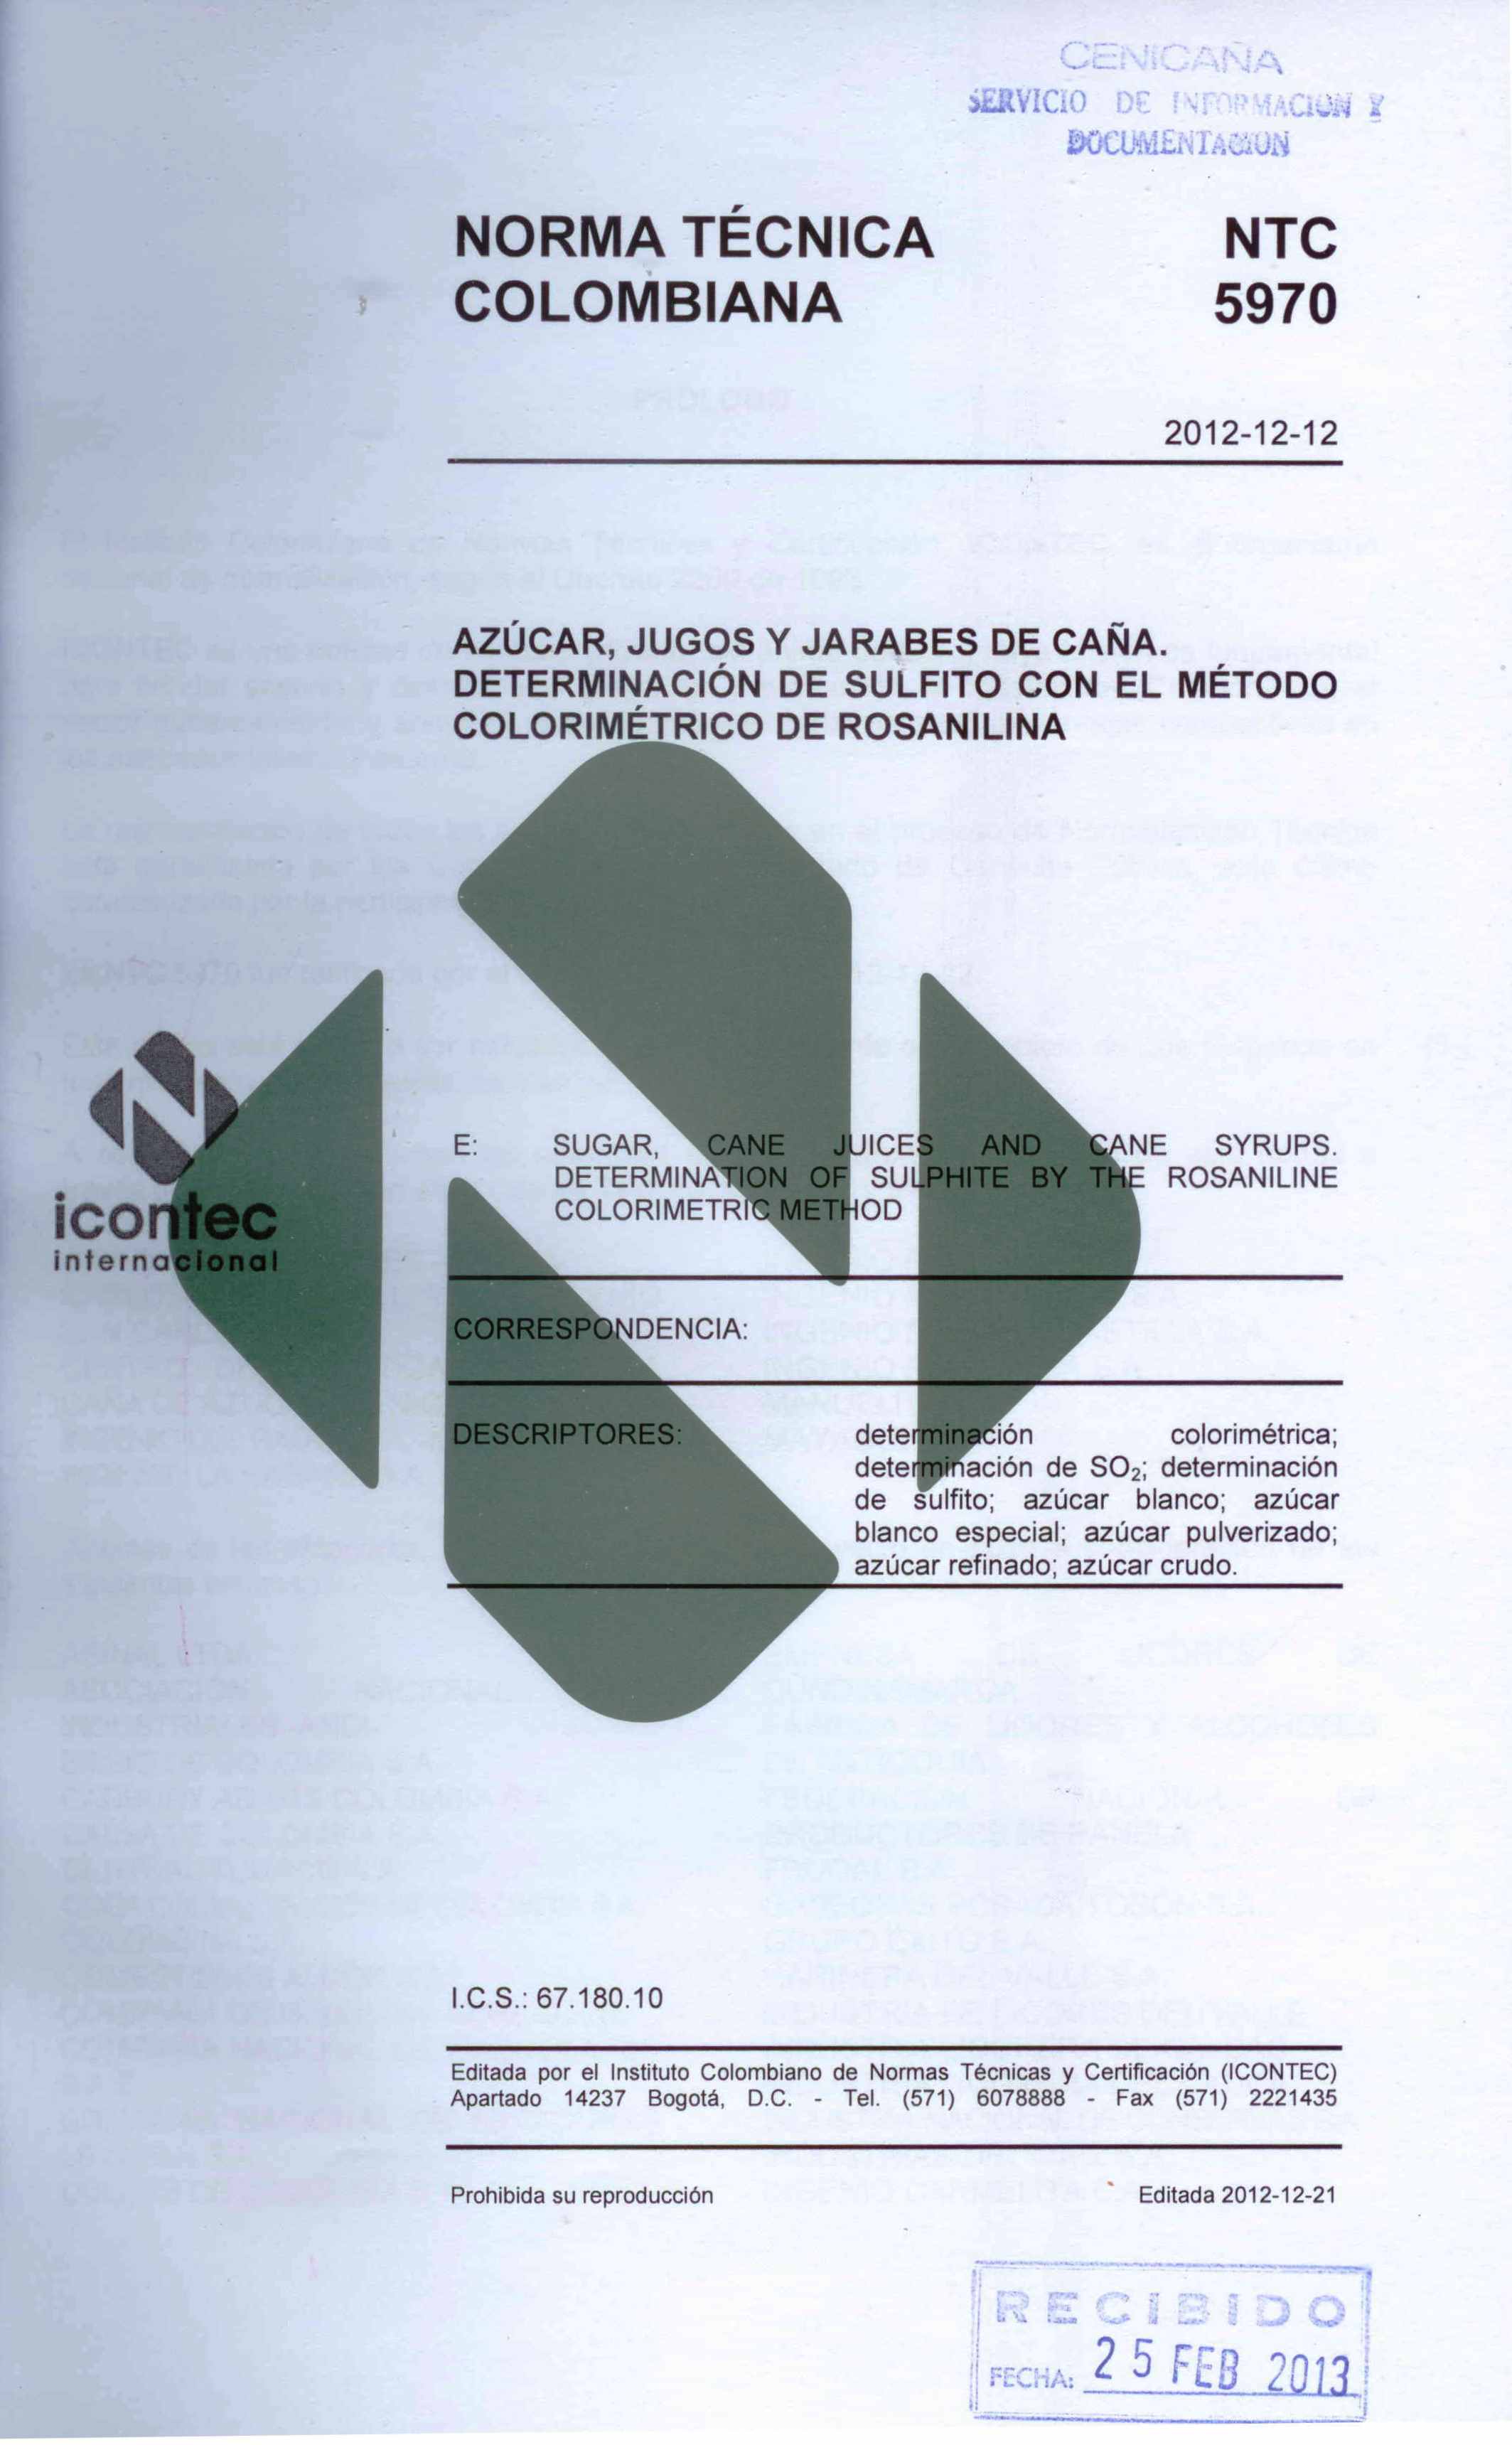 http://www.cenicana.org/investigacion/seica/imagenes_libros/2013/NTC_5940.jpg